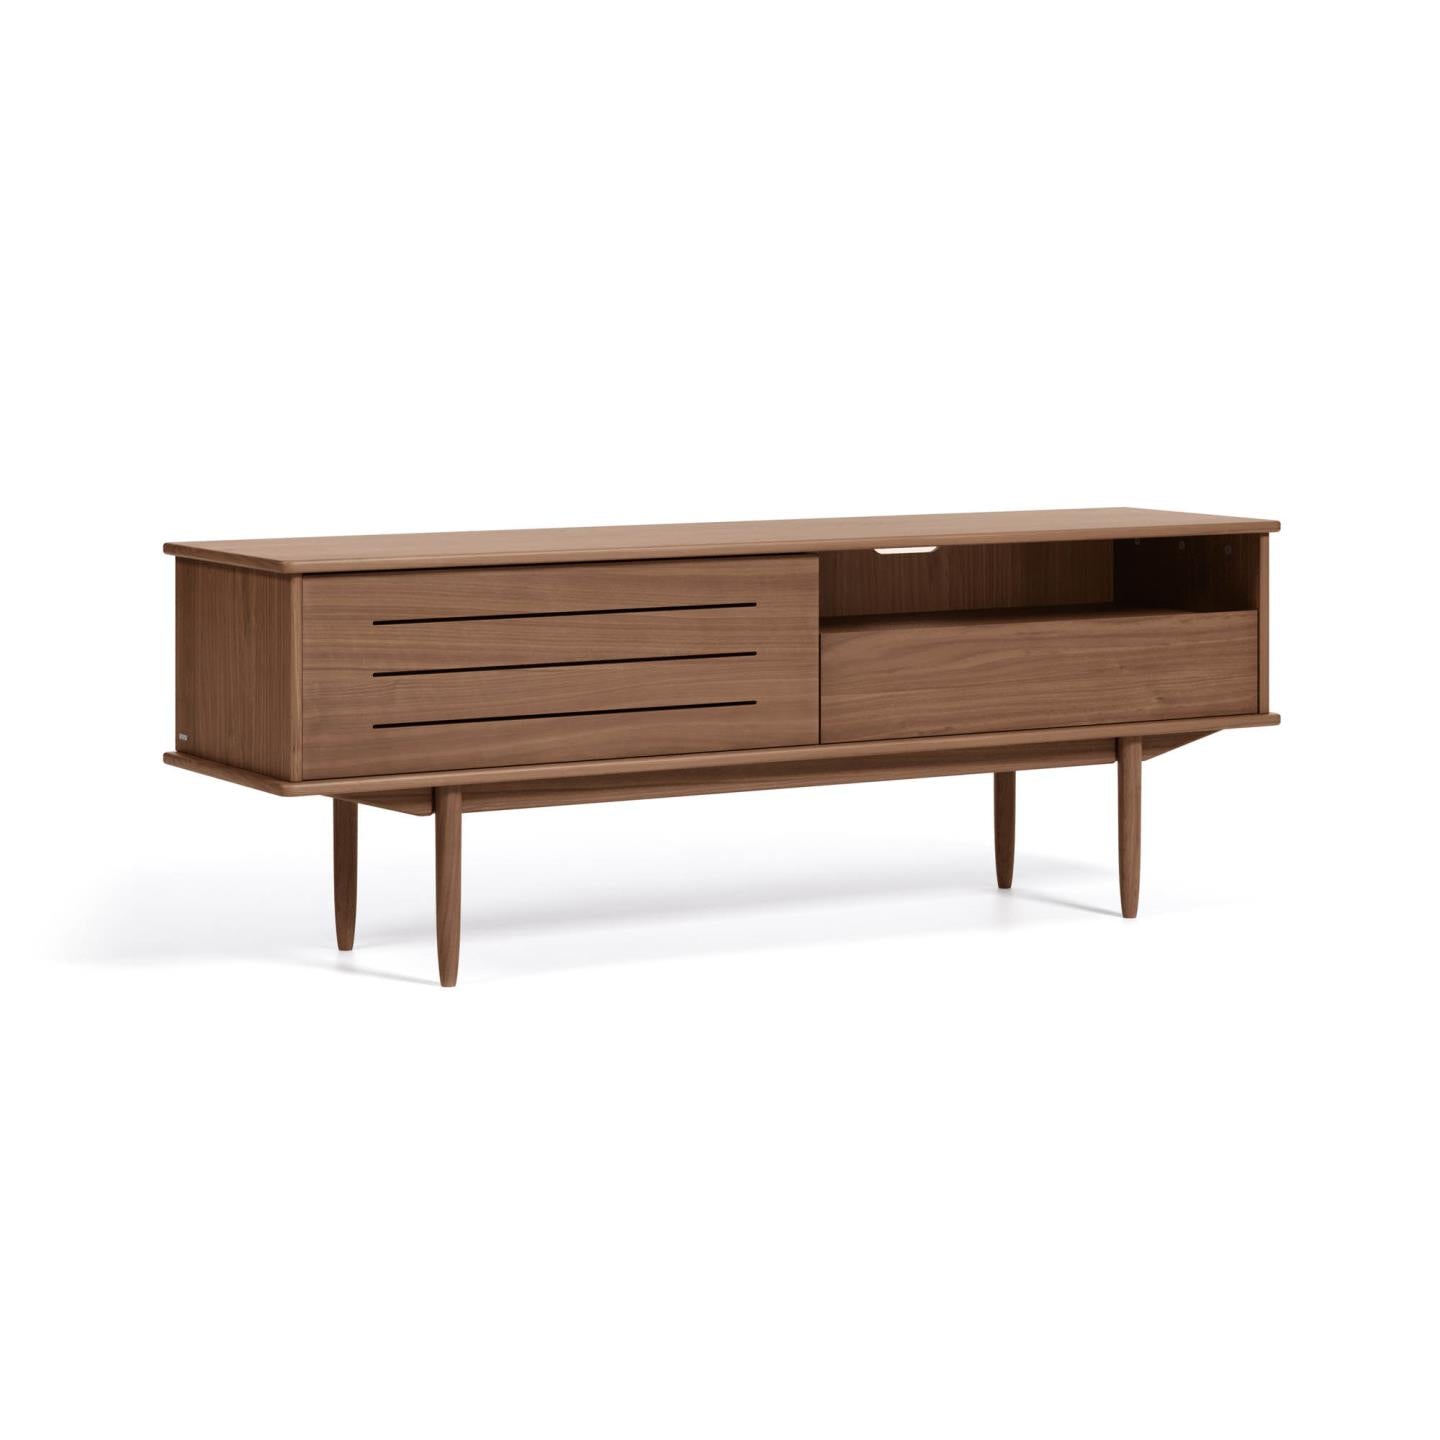 Carolin walnut wood veneer single door & drawer TV stand, 180 x 63.5 cm